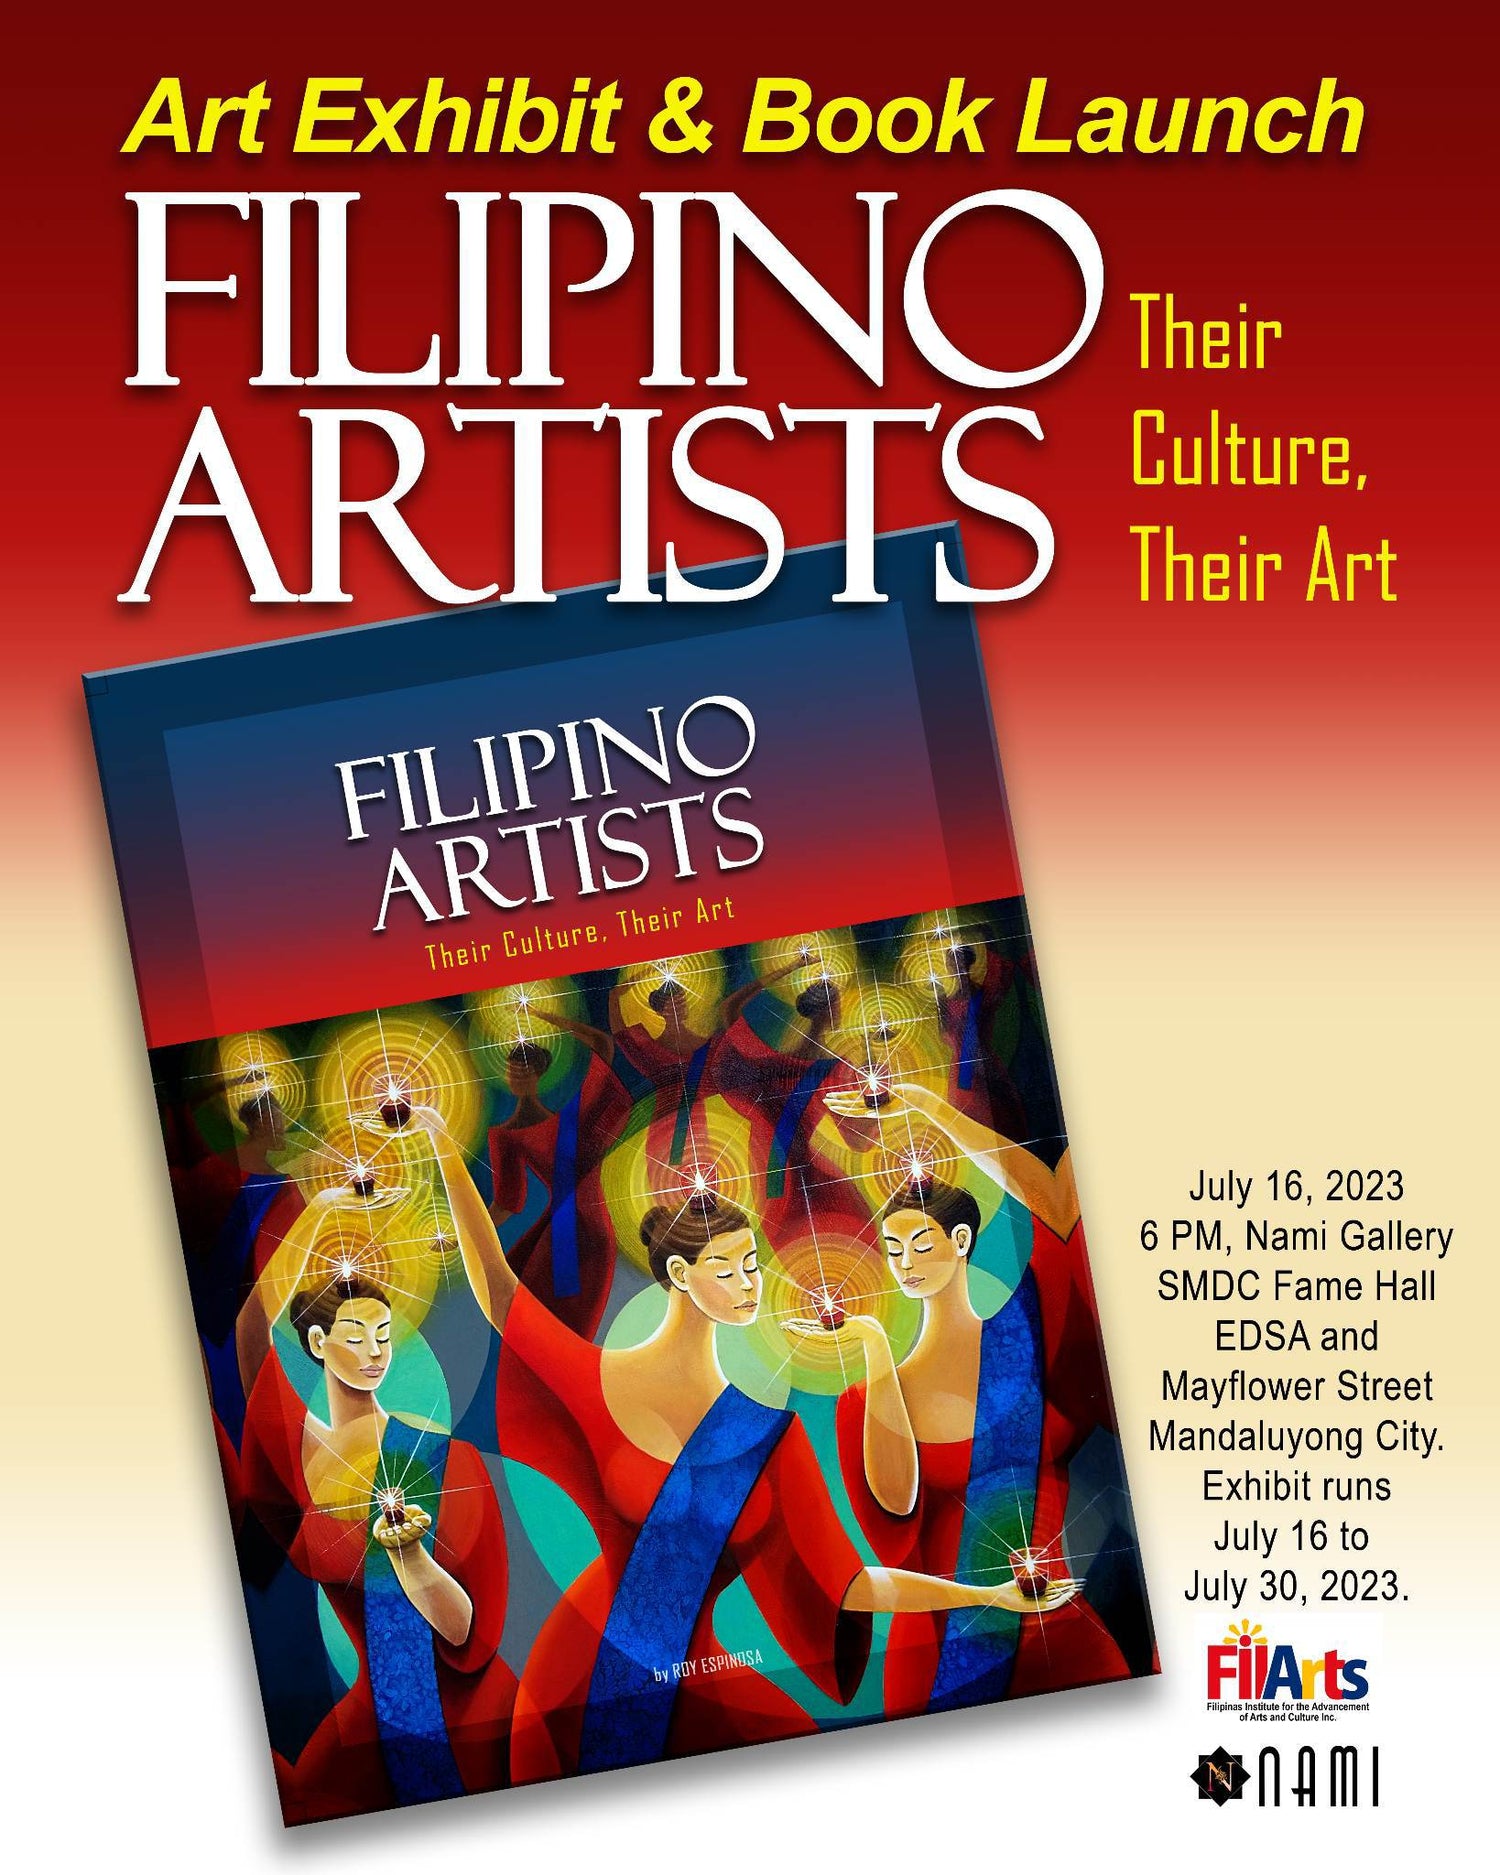 Filipino Artists: Their Culture, Their Art